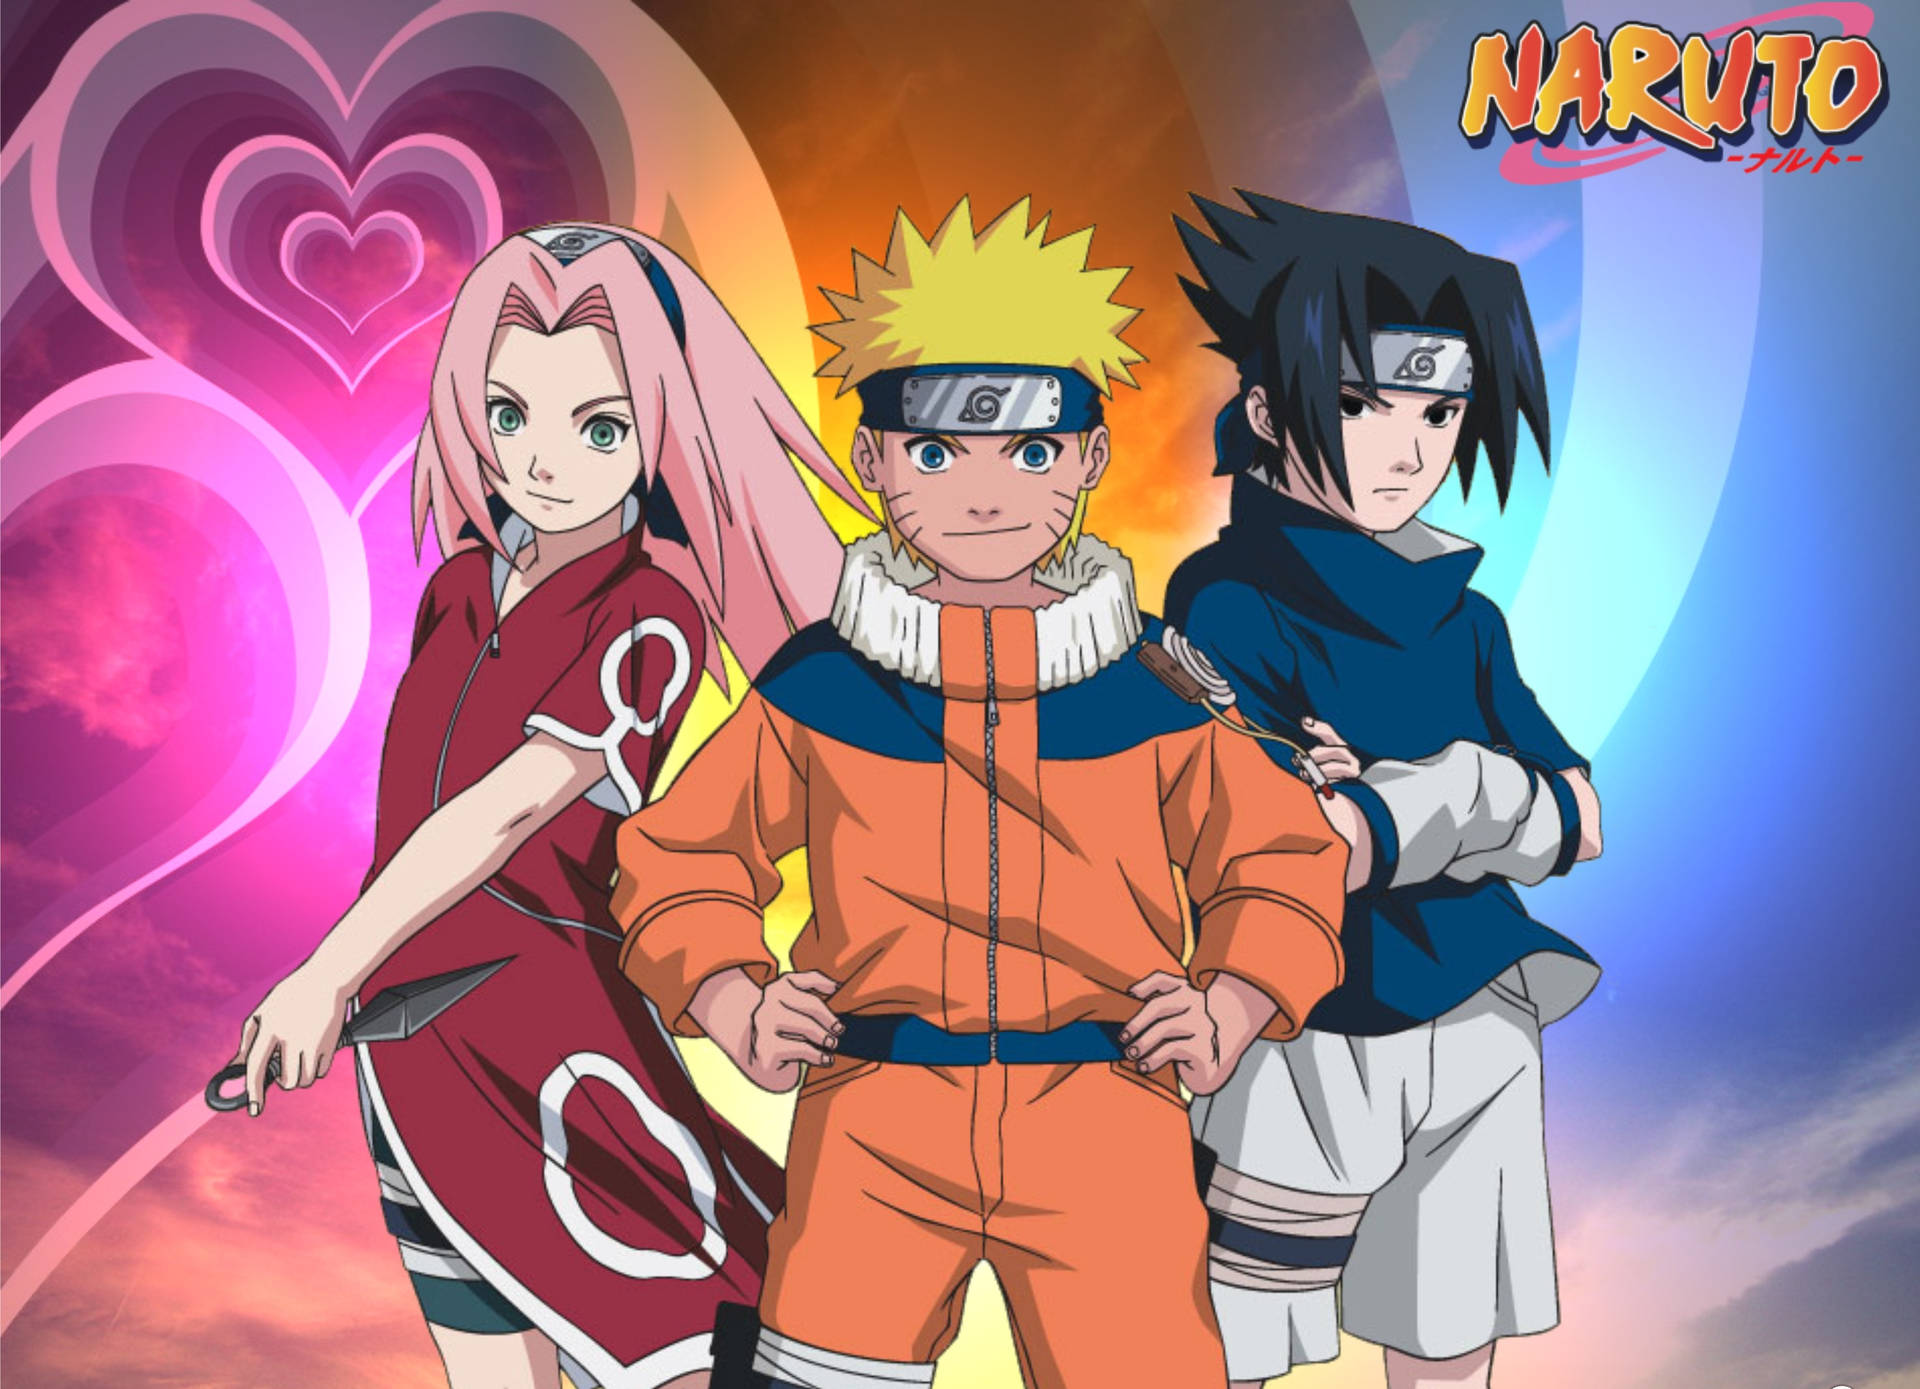 Posterdo Jovem Naruto, Sasuke E Sakura. Papel de Parede